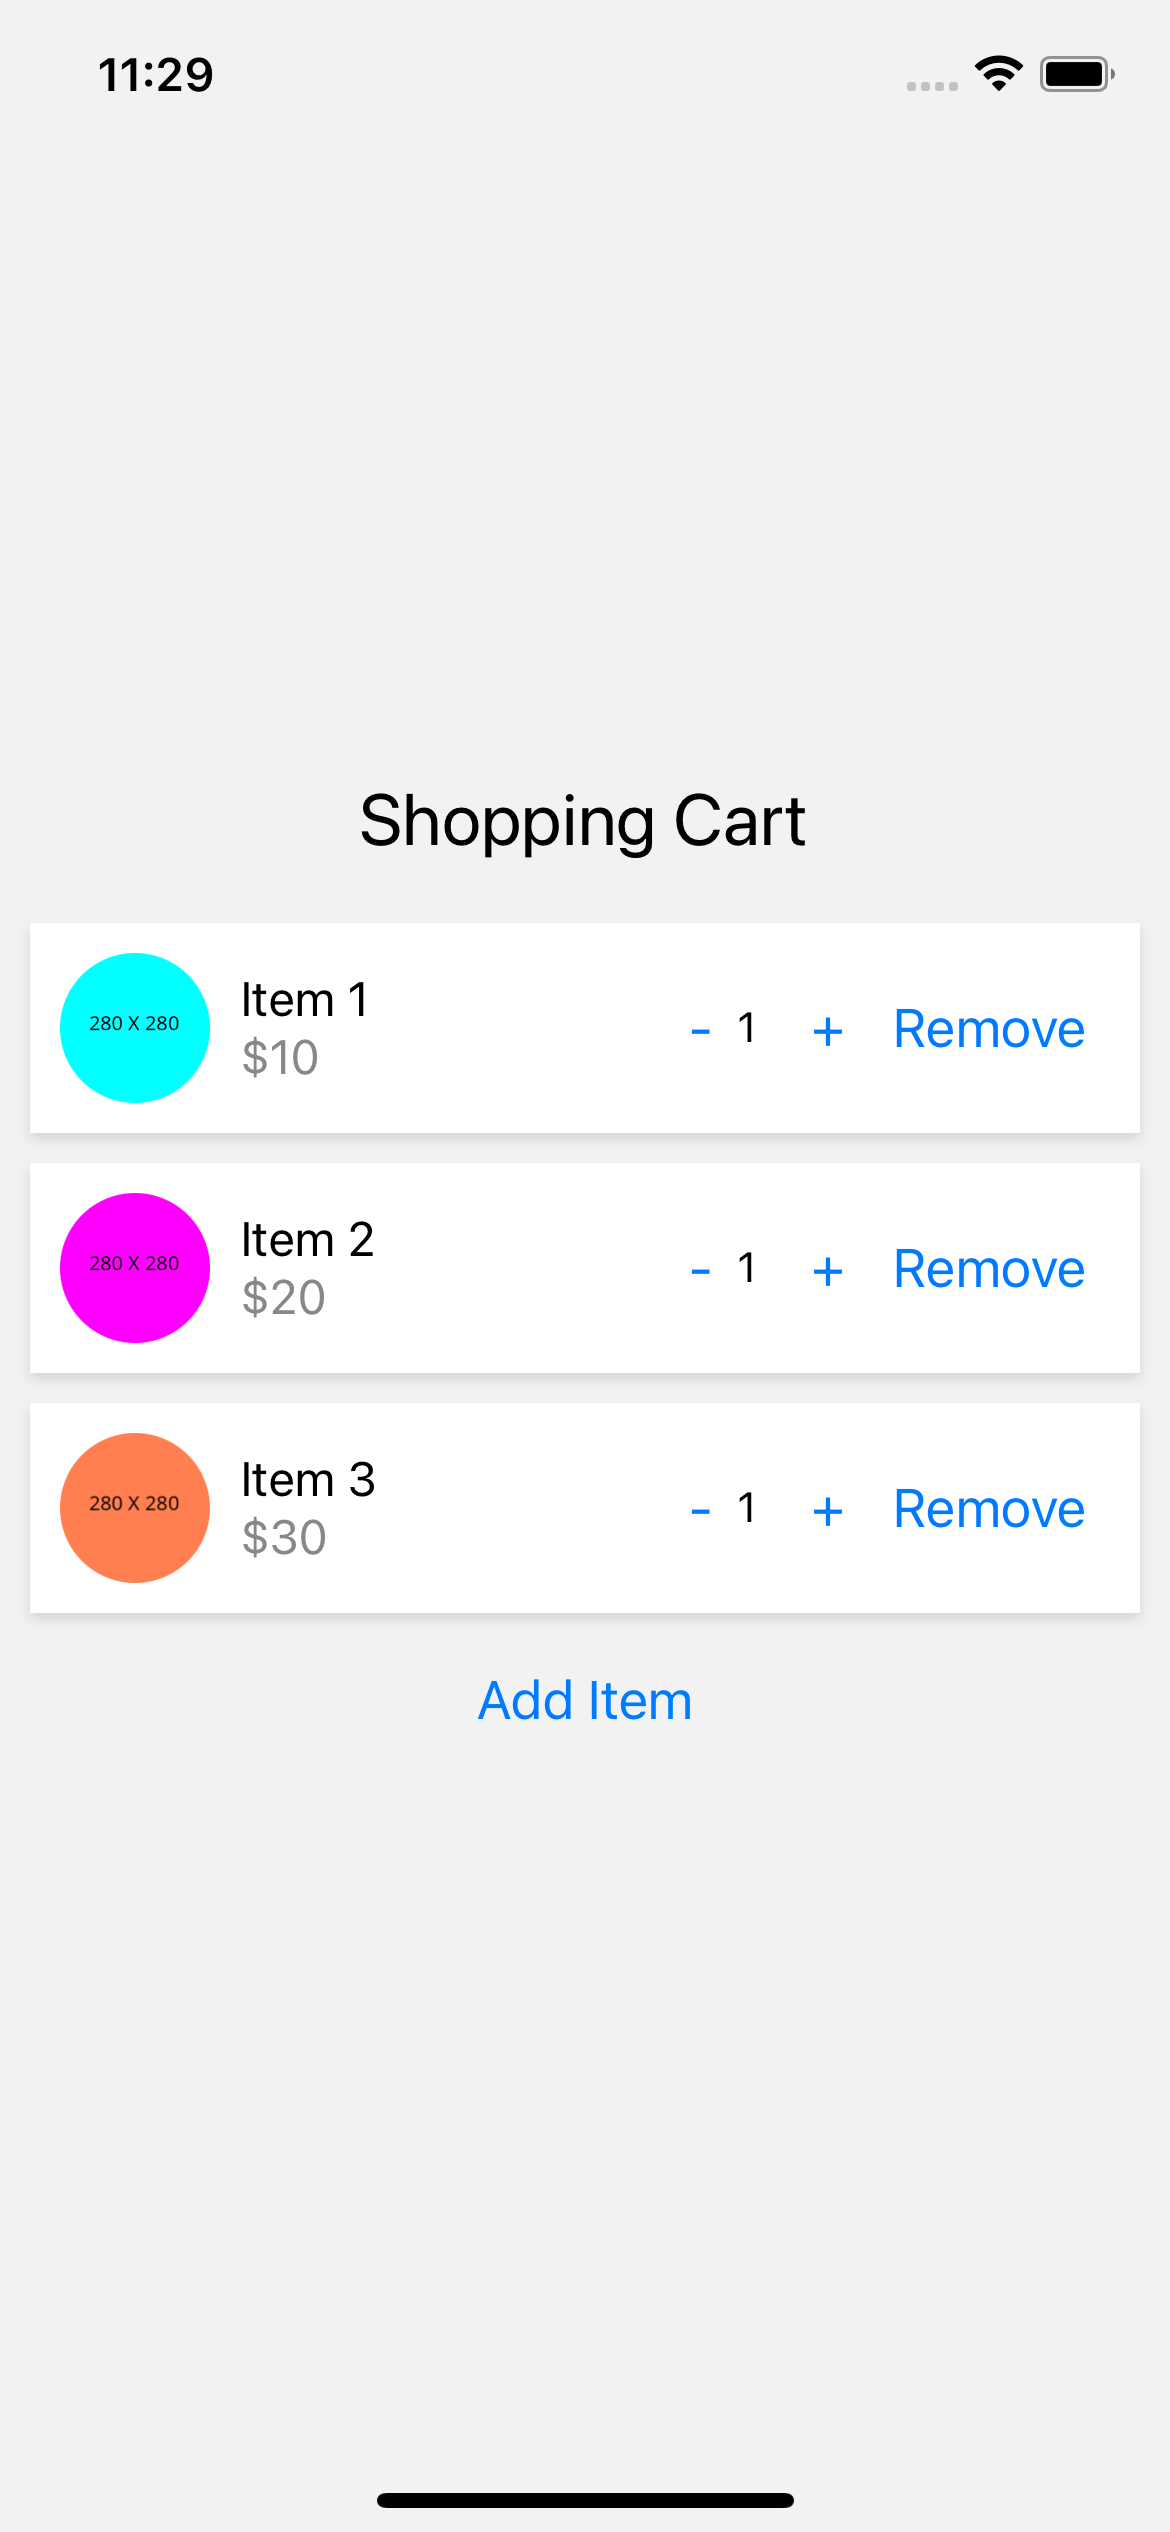 React native template. Shopping cart